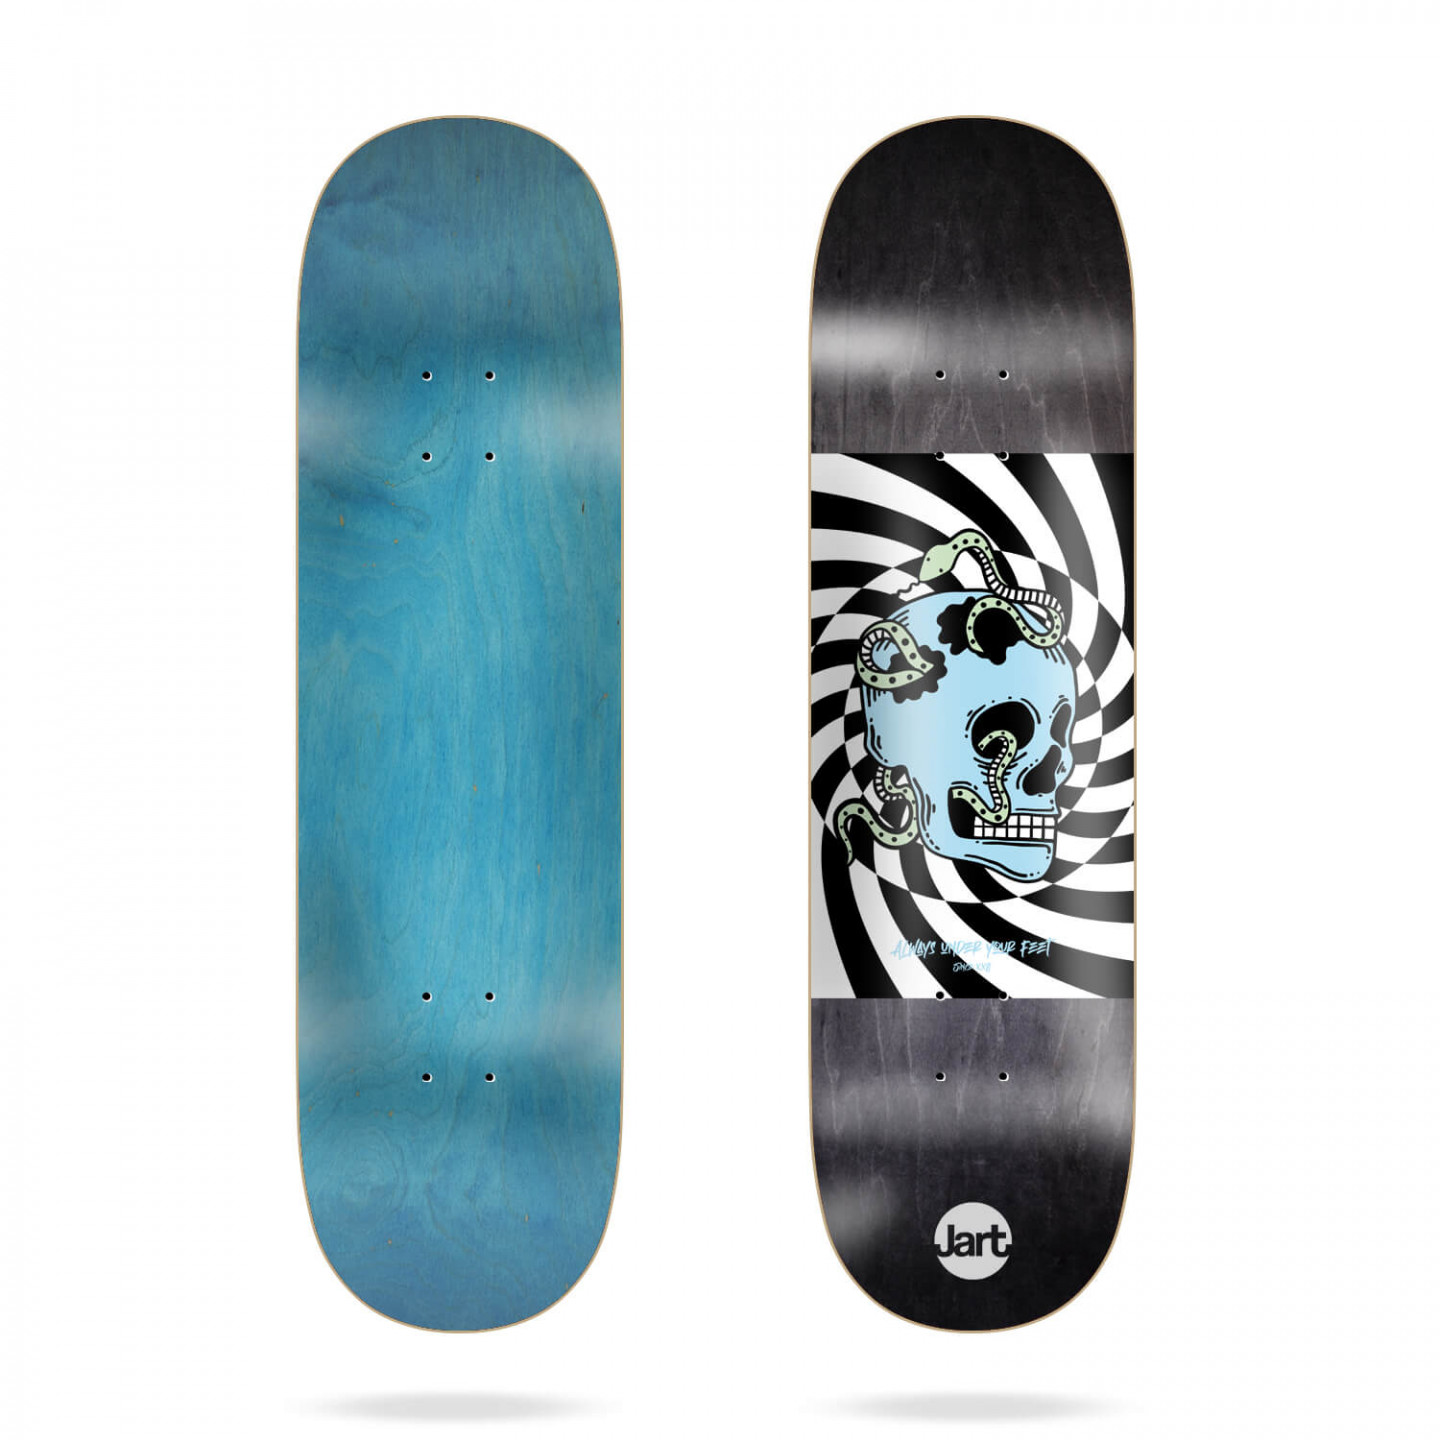 Planche de Skate Jart Abstract 8.375 - Planches - Jart Skateboards